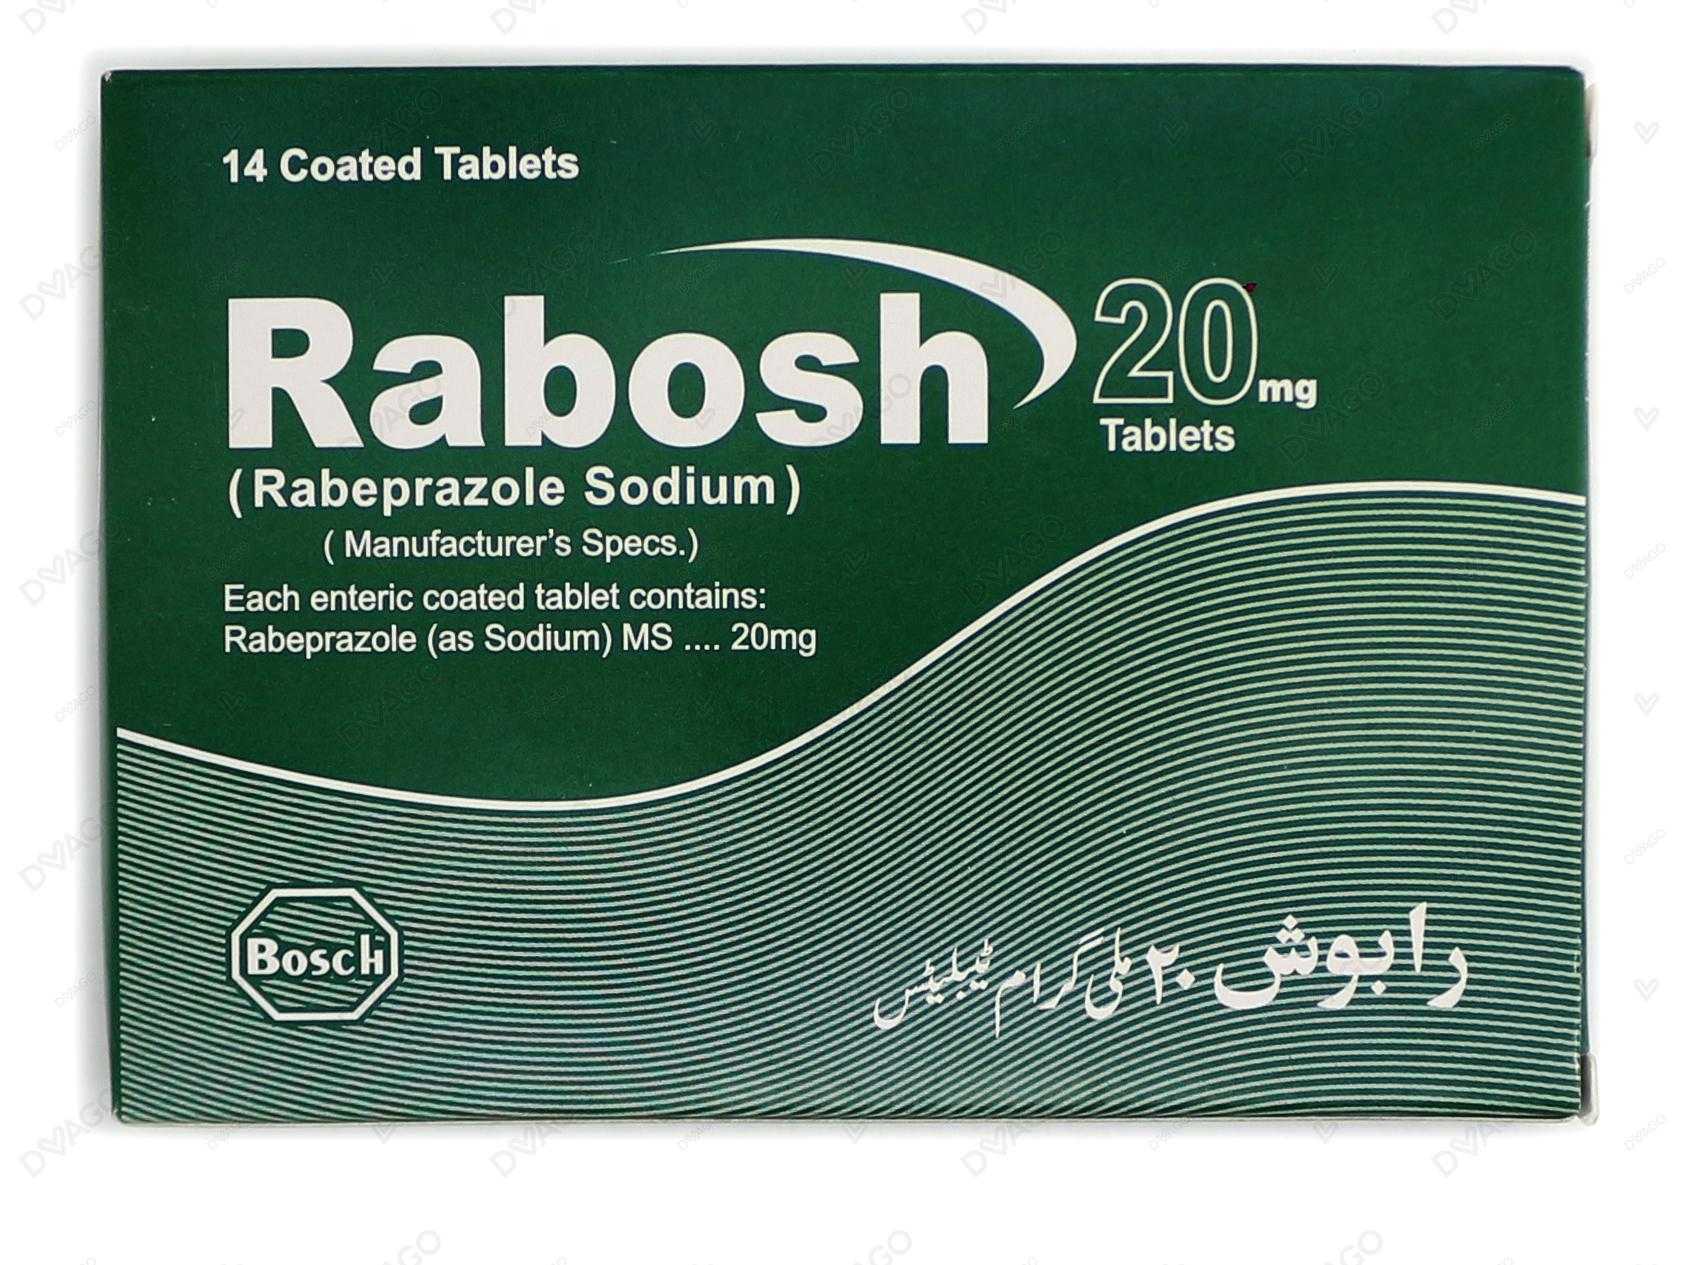 rabosh tablets 20mg